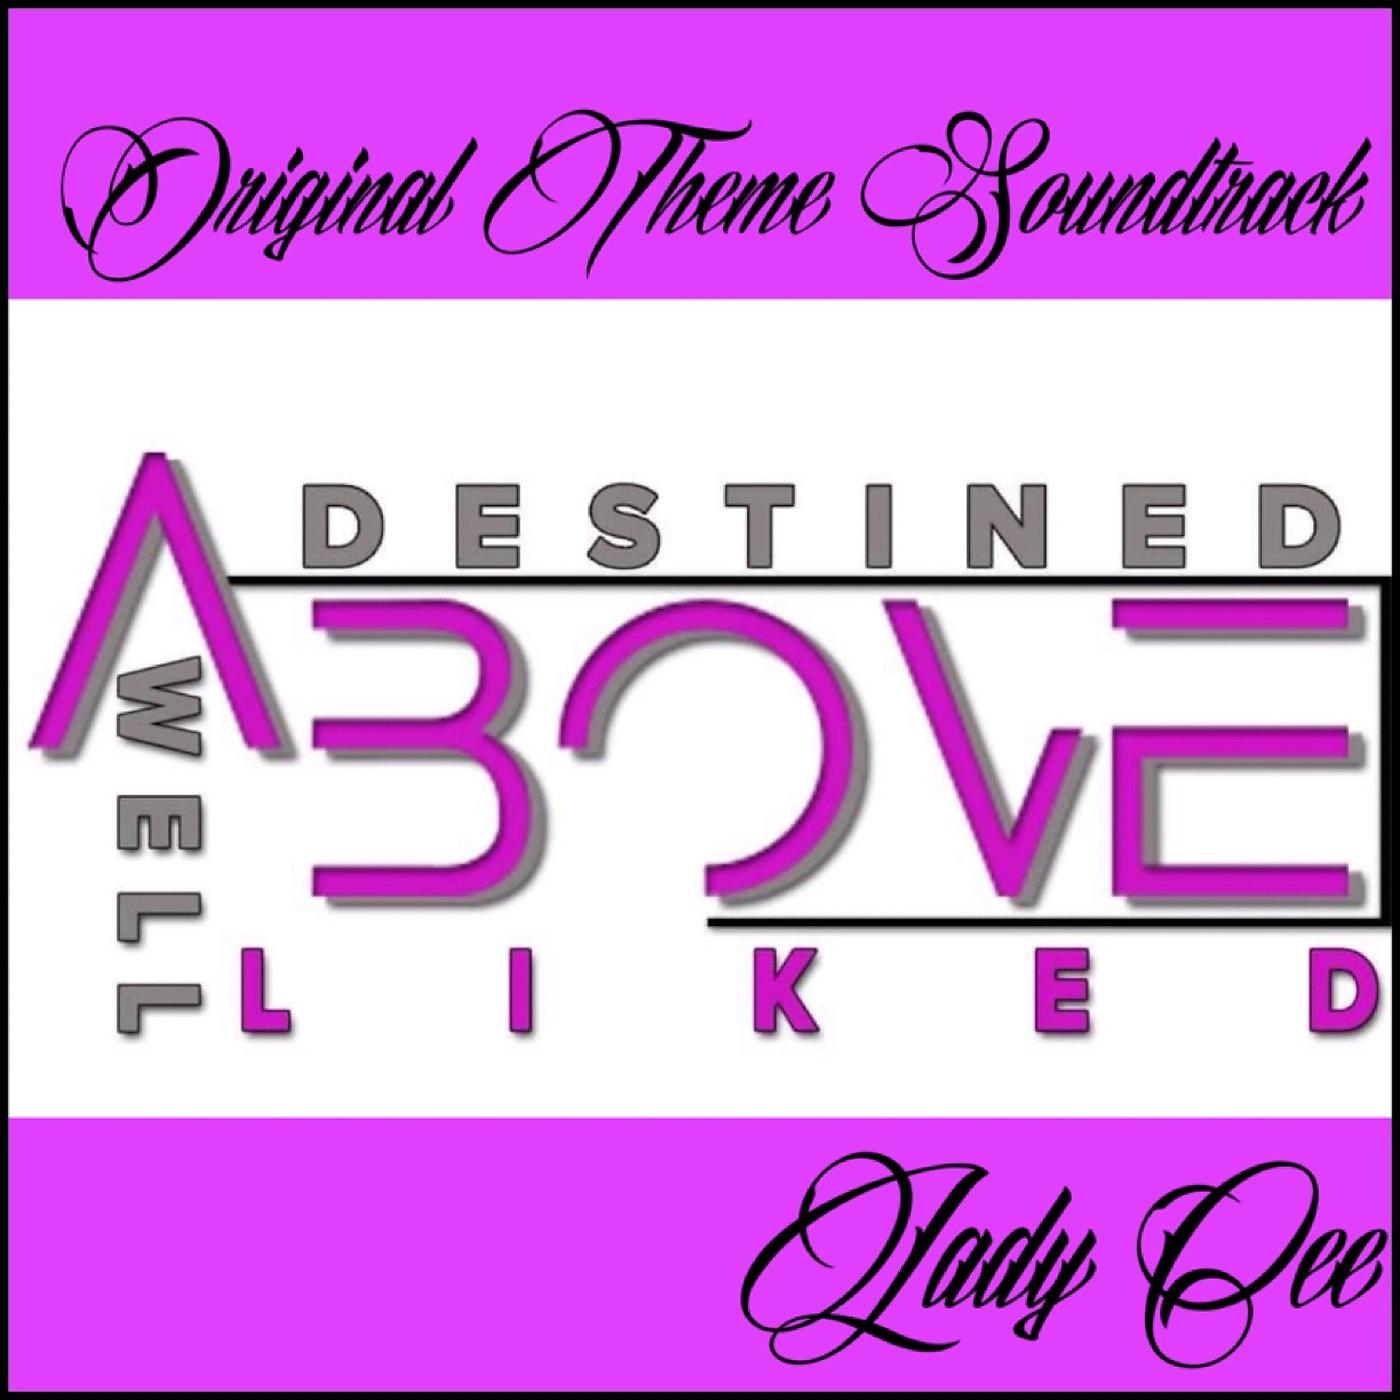 Постер альбома Destined Above Well Liked (Original Theme Soundtrack)